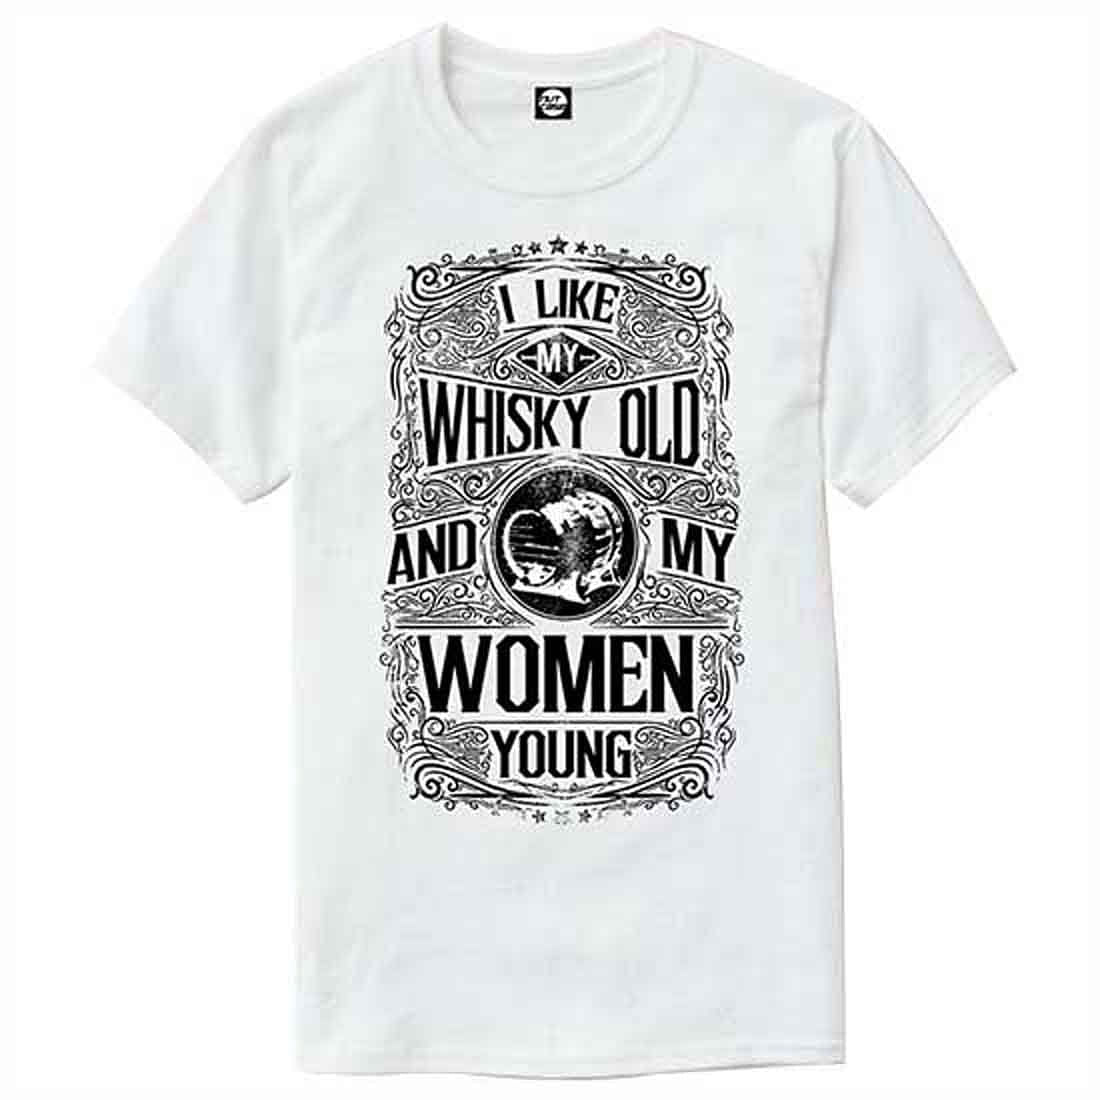 Nutcase Designer Round Neck Men's T-Shirt Wrinkle-Free Poly Cotton Tees - Whiskey Old Women Young Nutcase